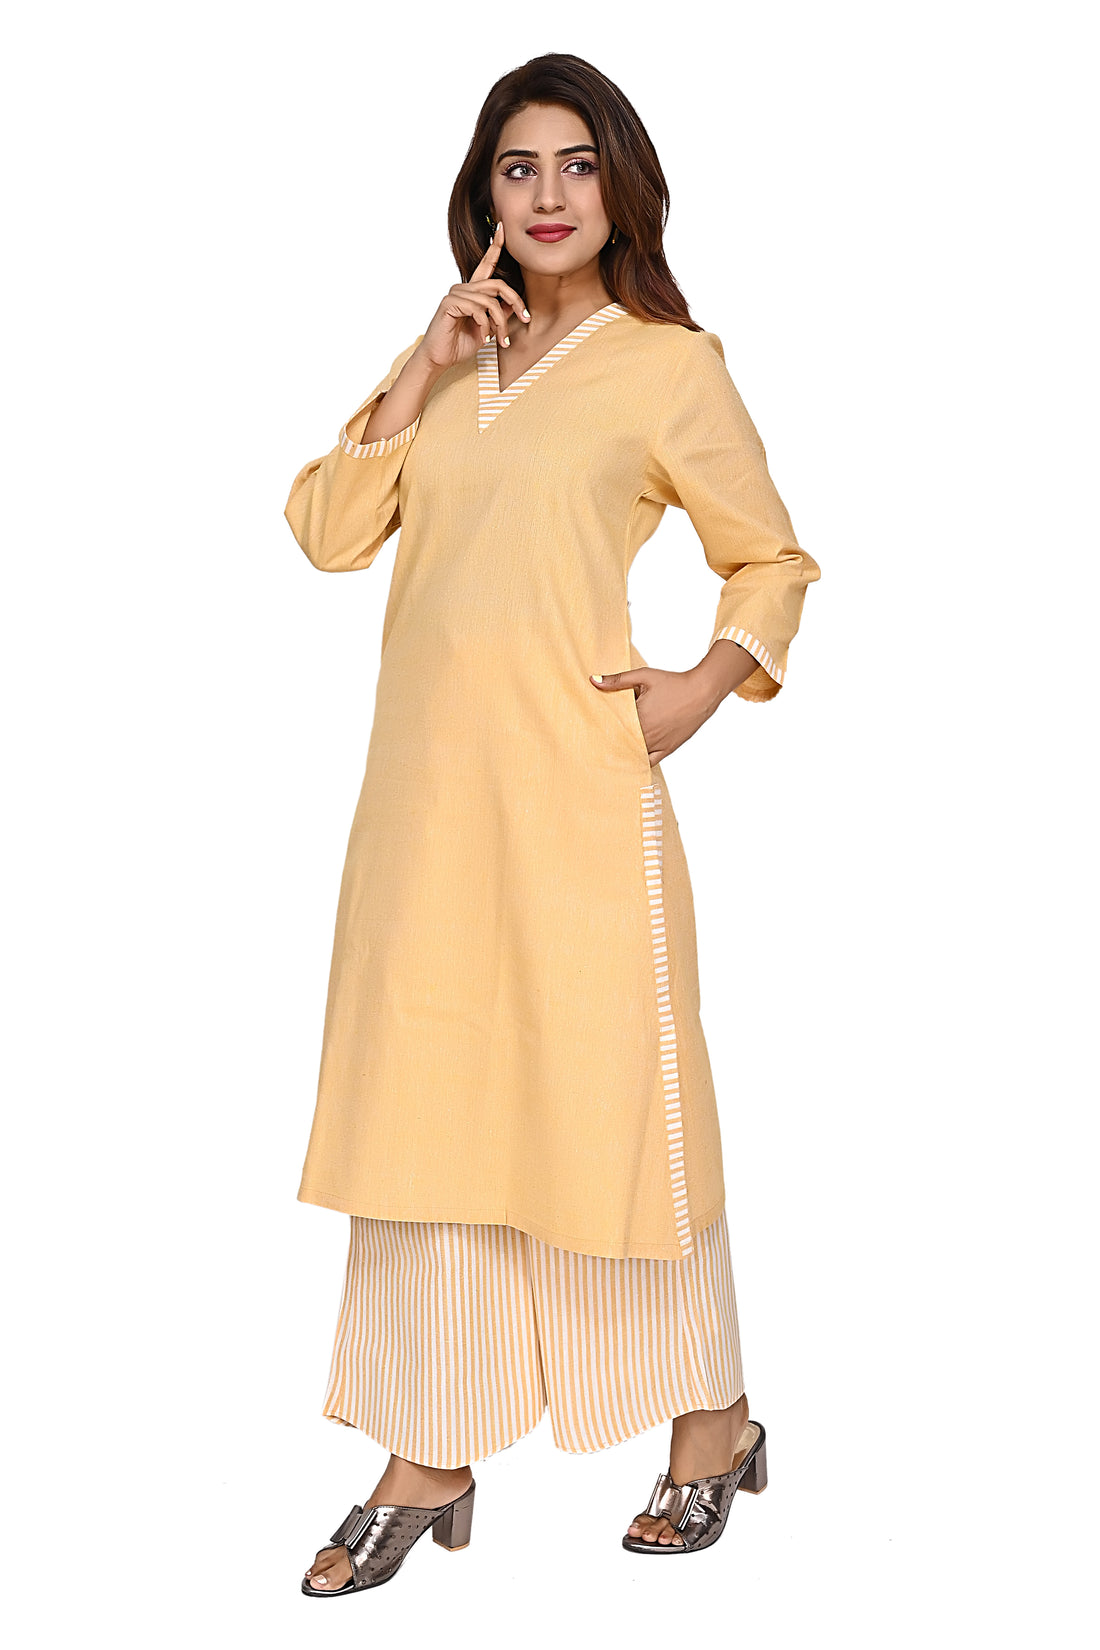 Nirmal online Premium cotton coord set kurti for Women in yellow colour